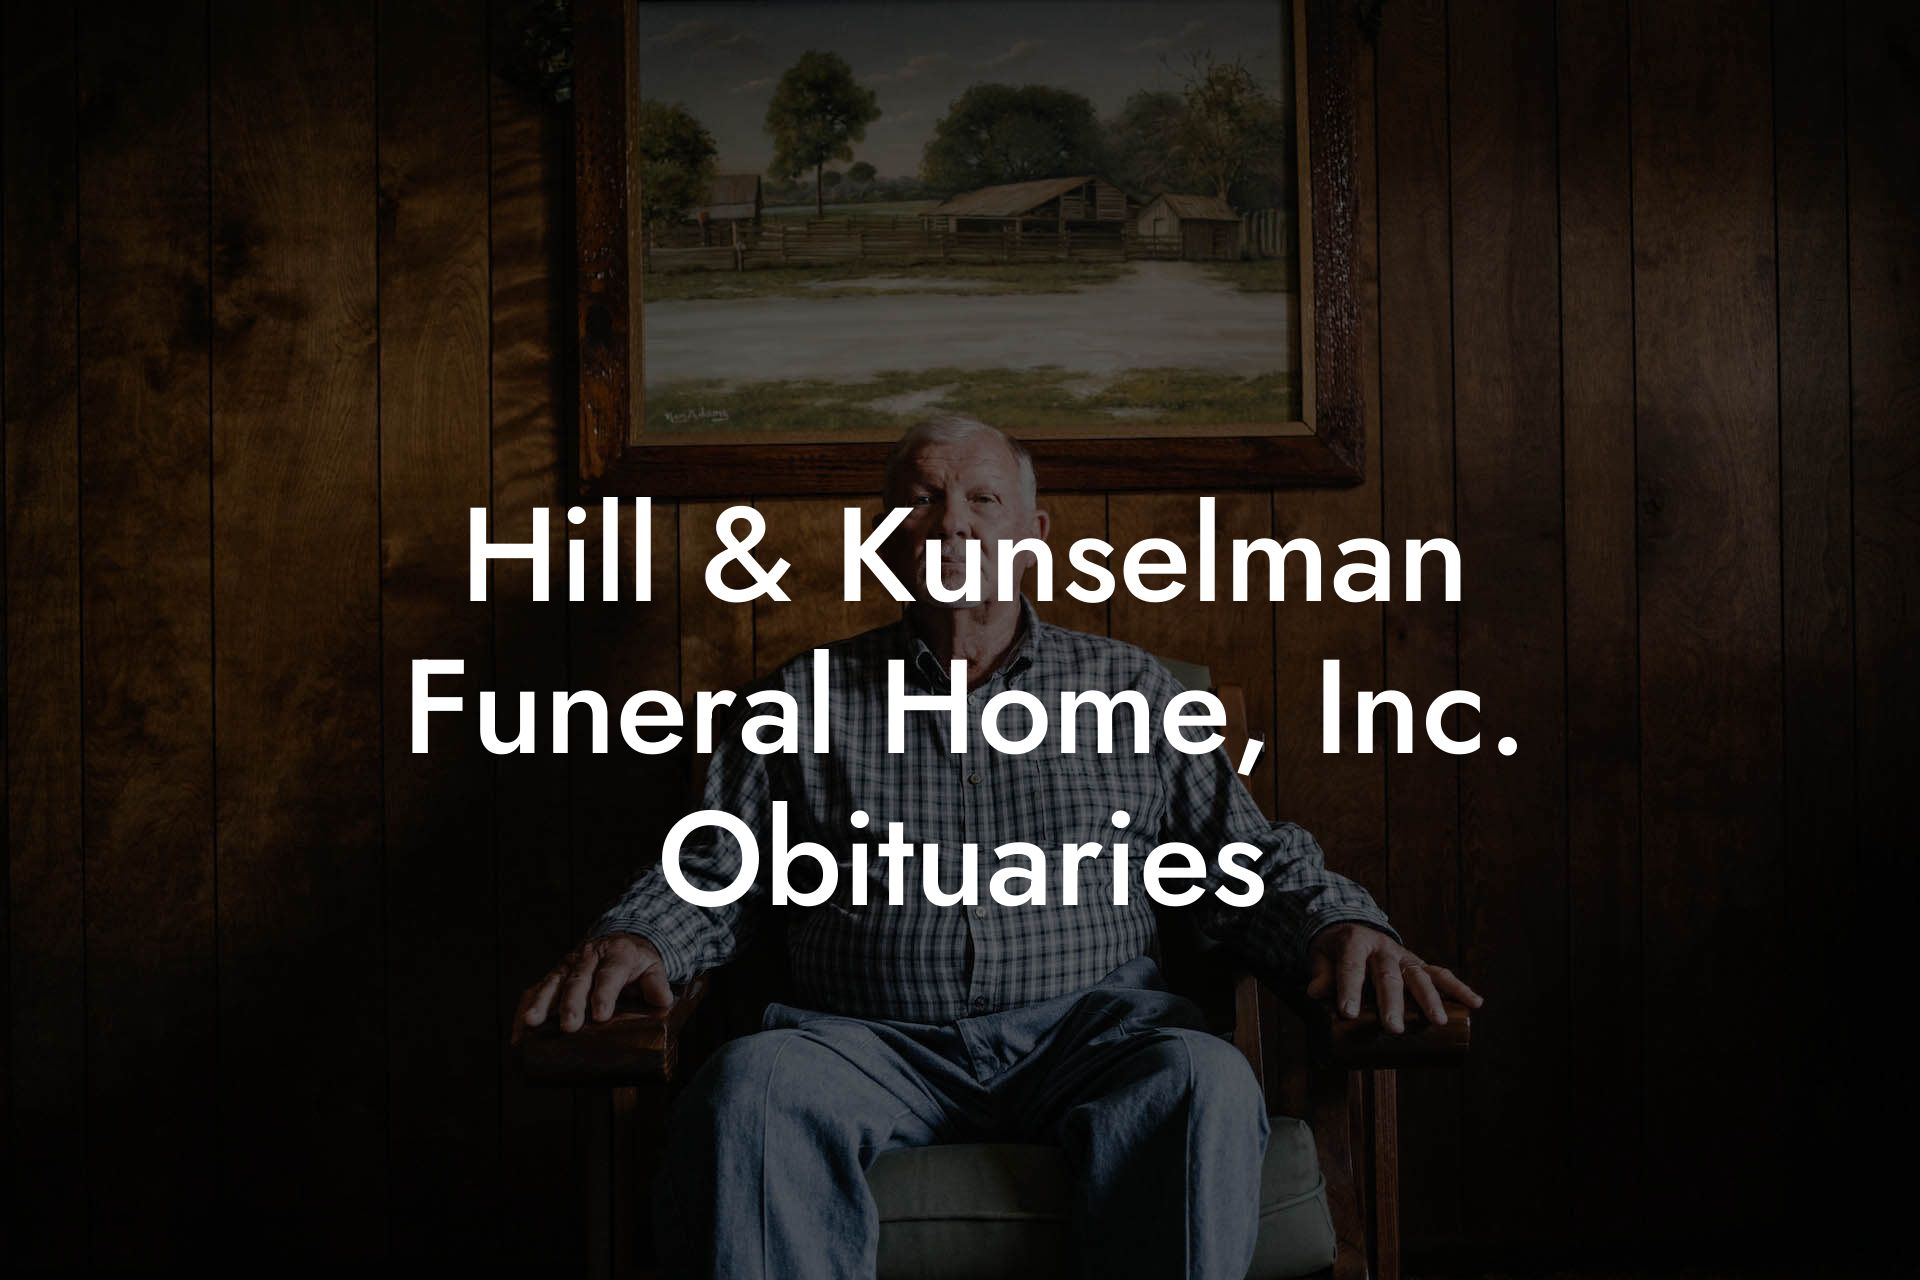 Hill & Kunselman Funeral Home, Inc. Obituaries